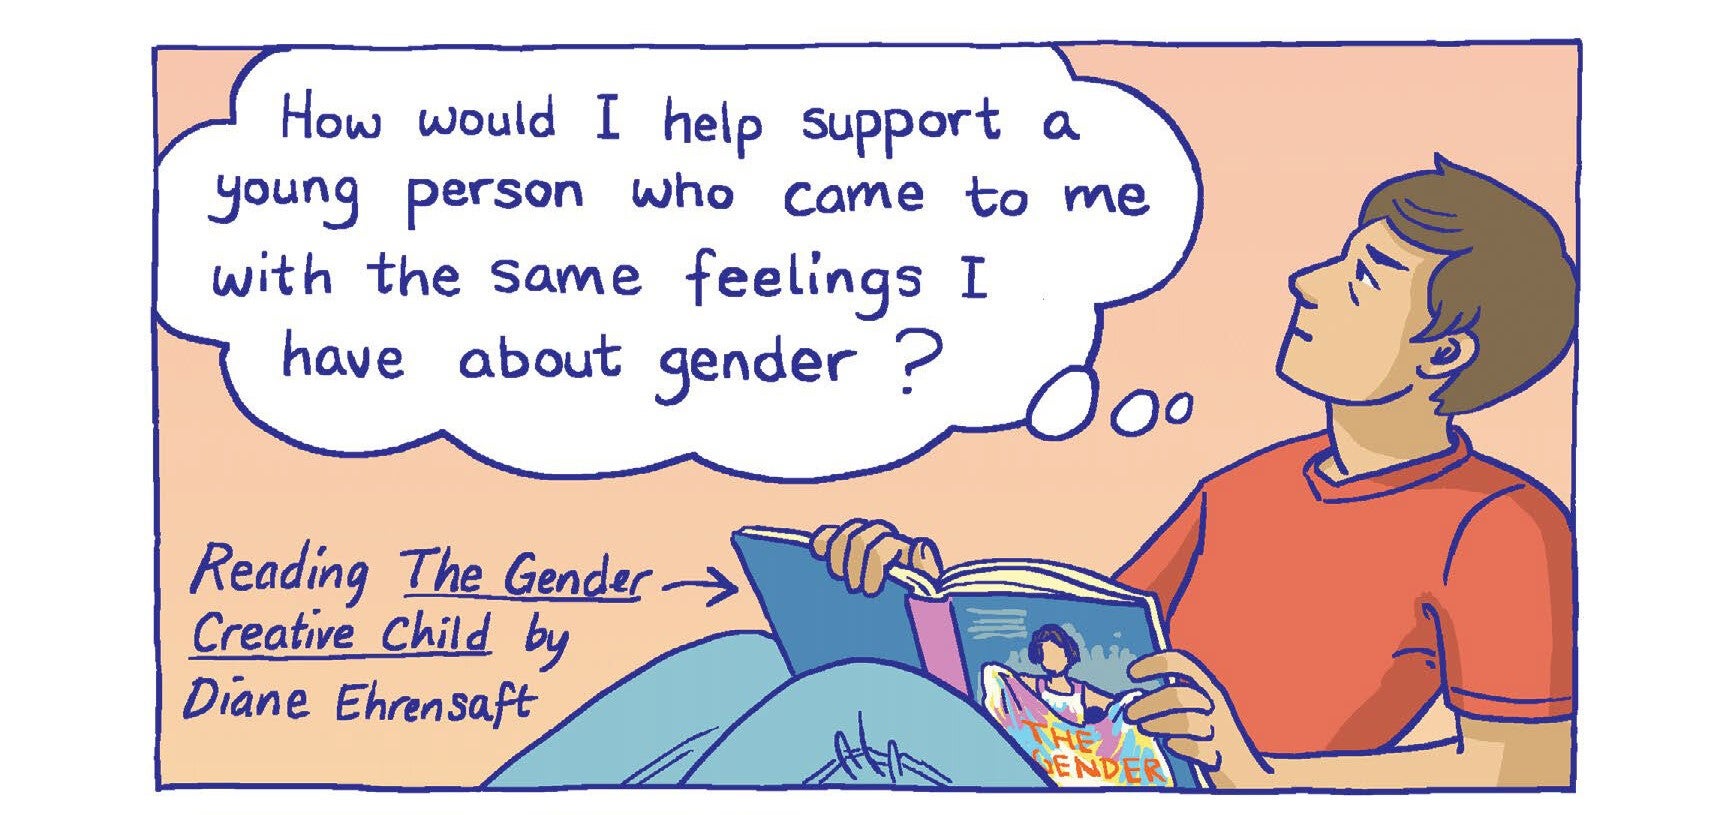 Interior panel from Maia Kobabe's Gender Queer memoir